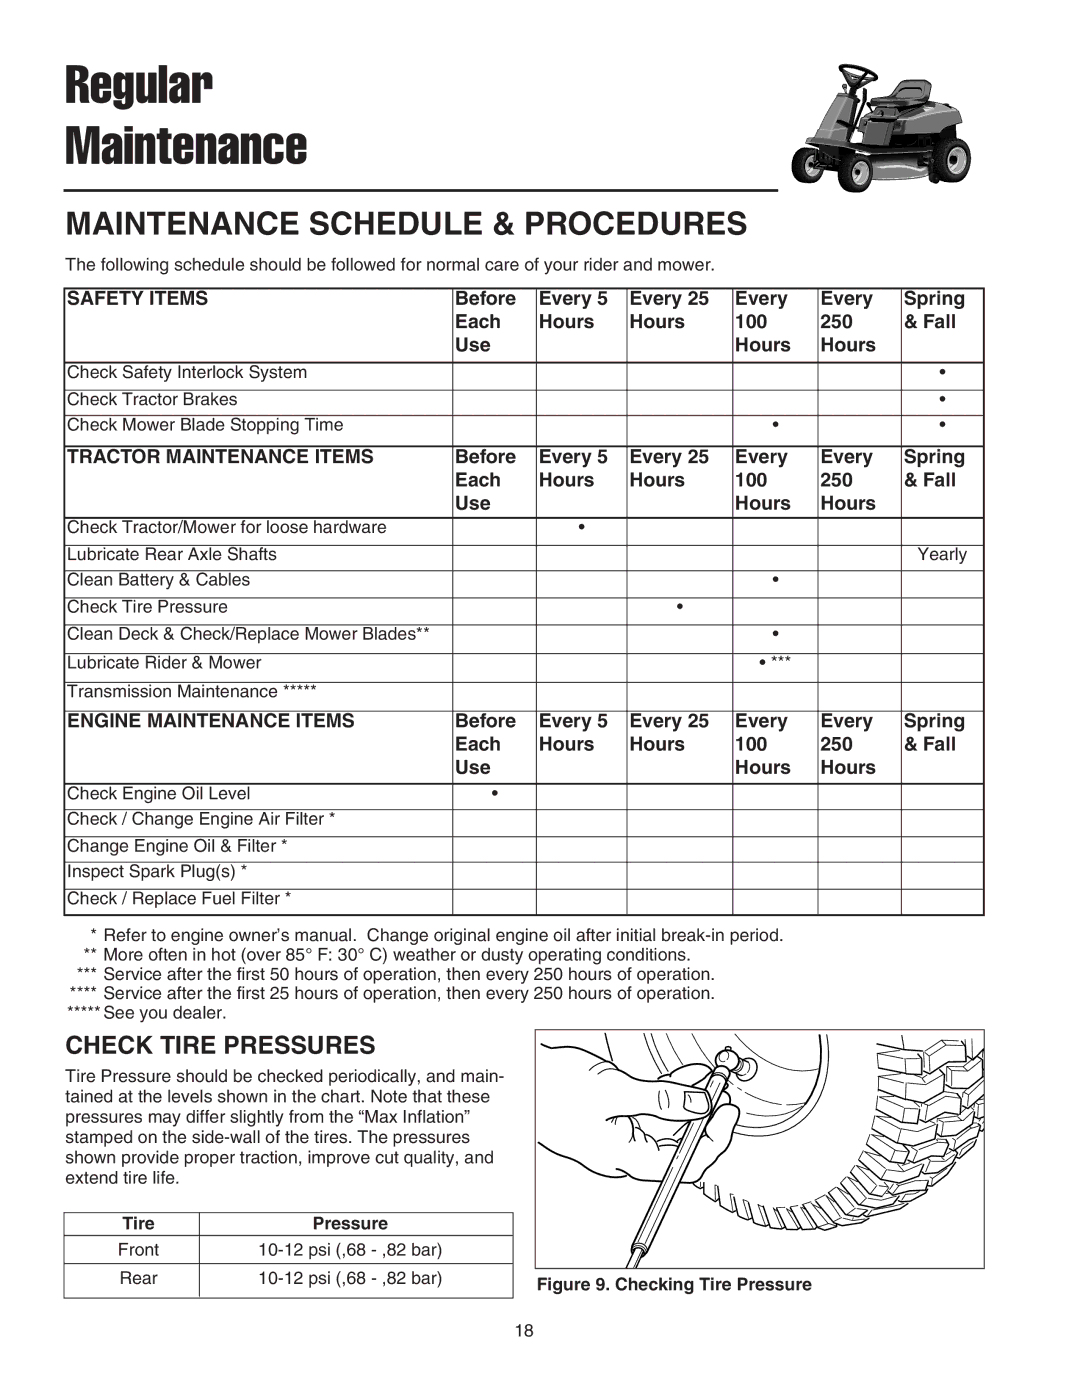 Snapper 2400 Series manual Regular Maintenance, Check Tire Pressures 